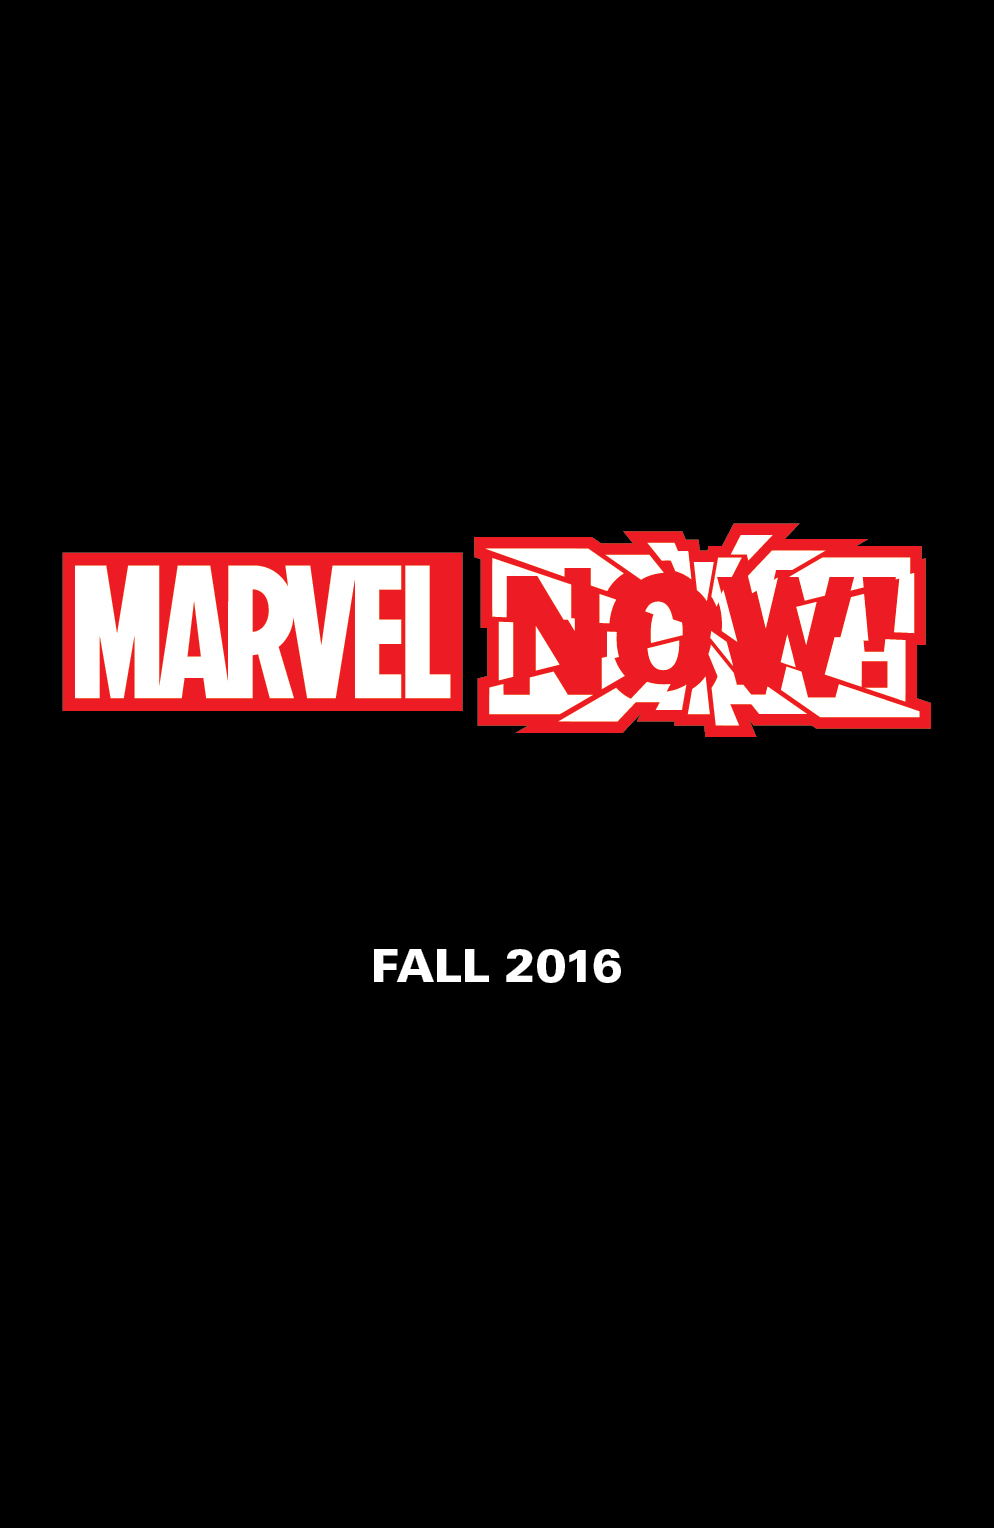 Marvel’s SDCC 2016 Panel Schedule